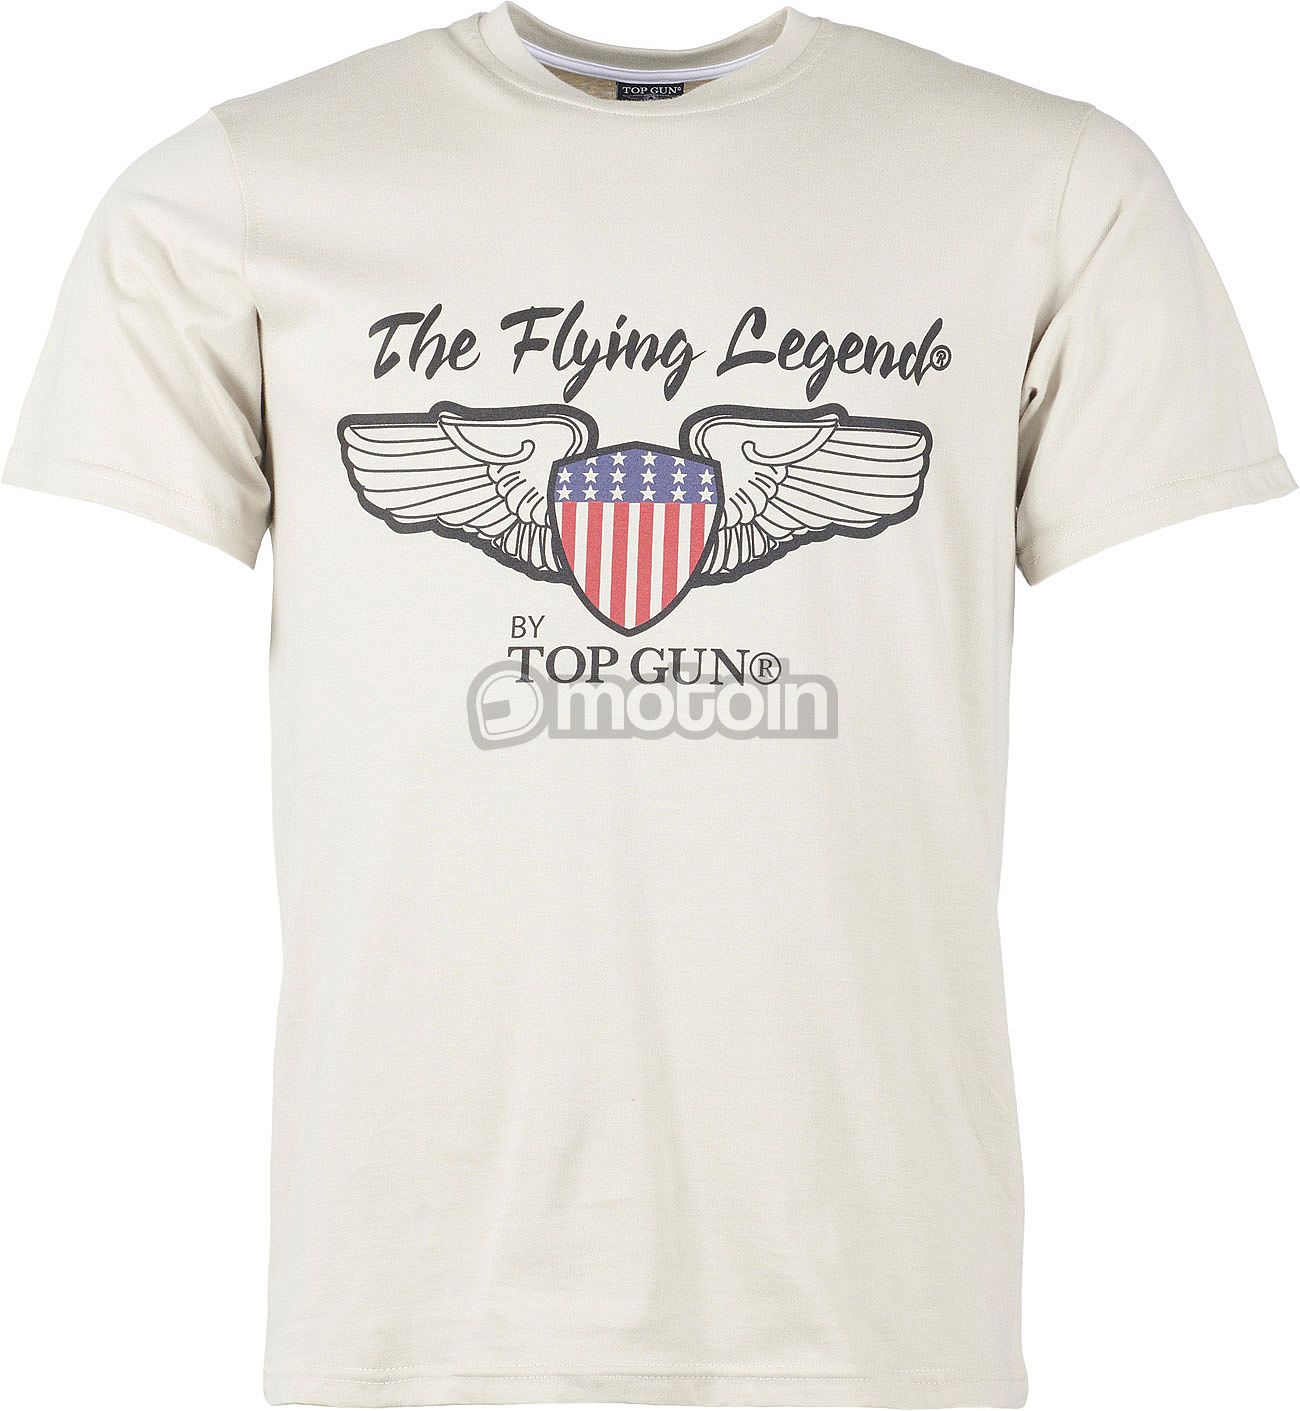 Top Gun Fly high, camiseta